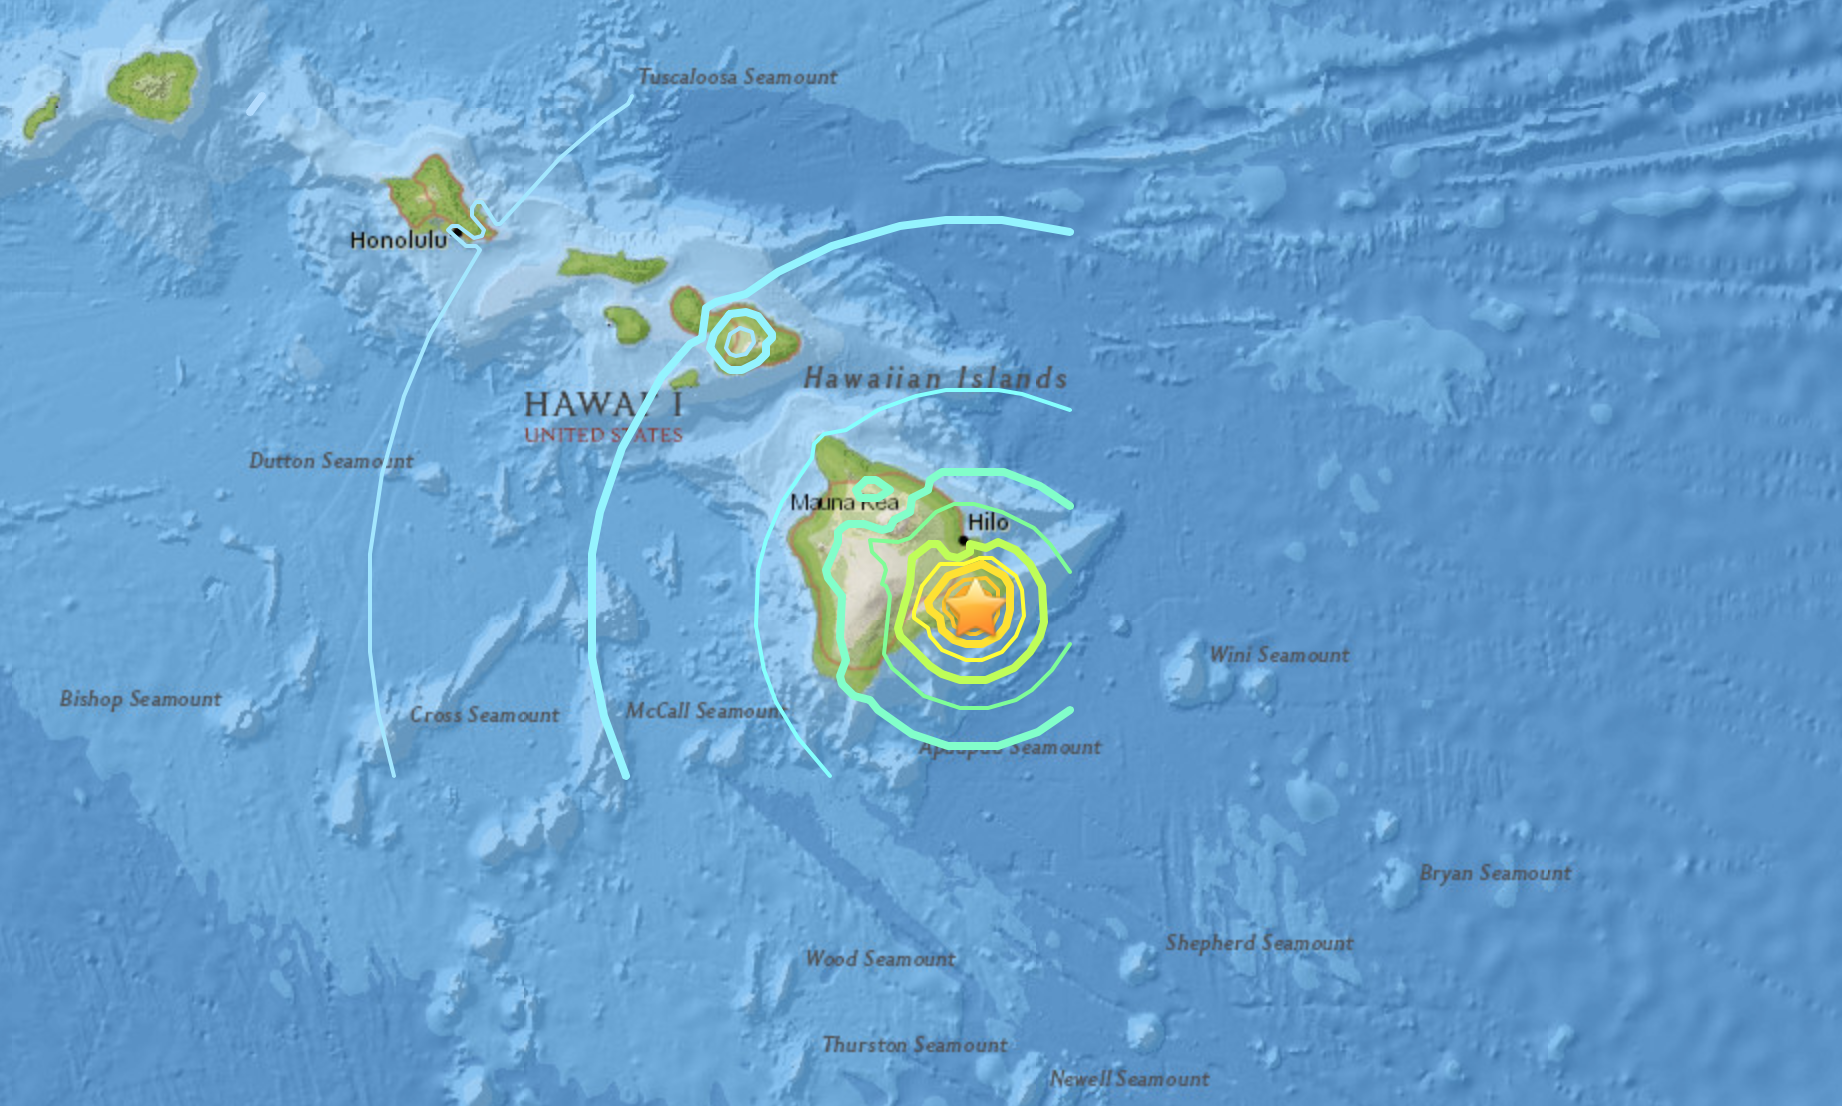 Hawaii earthquake volcanic activity